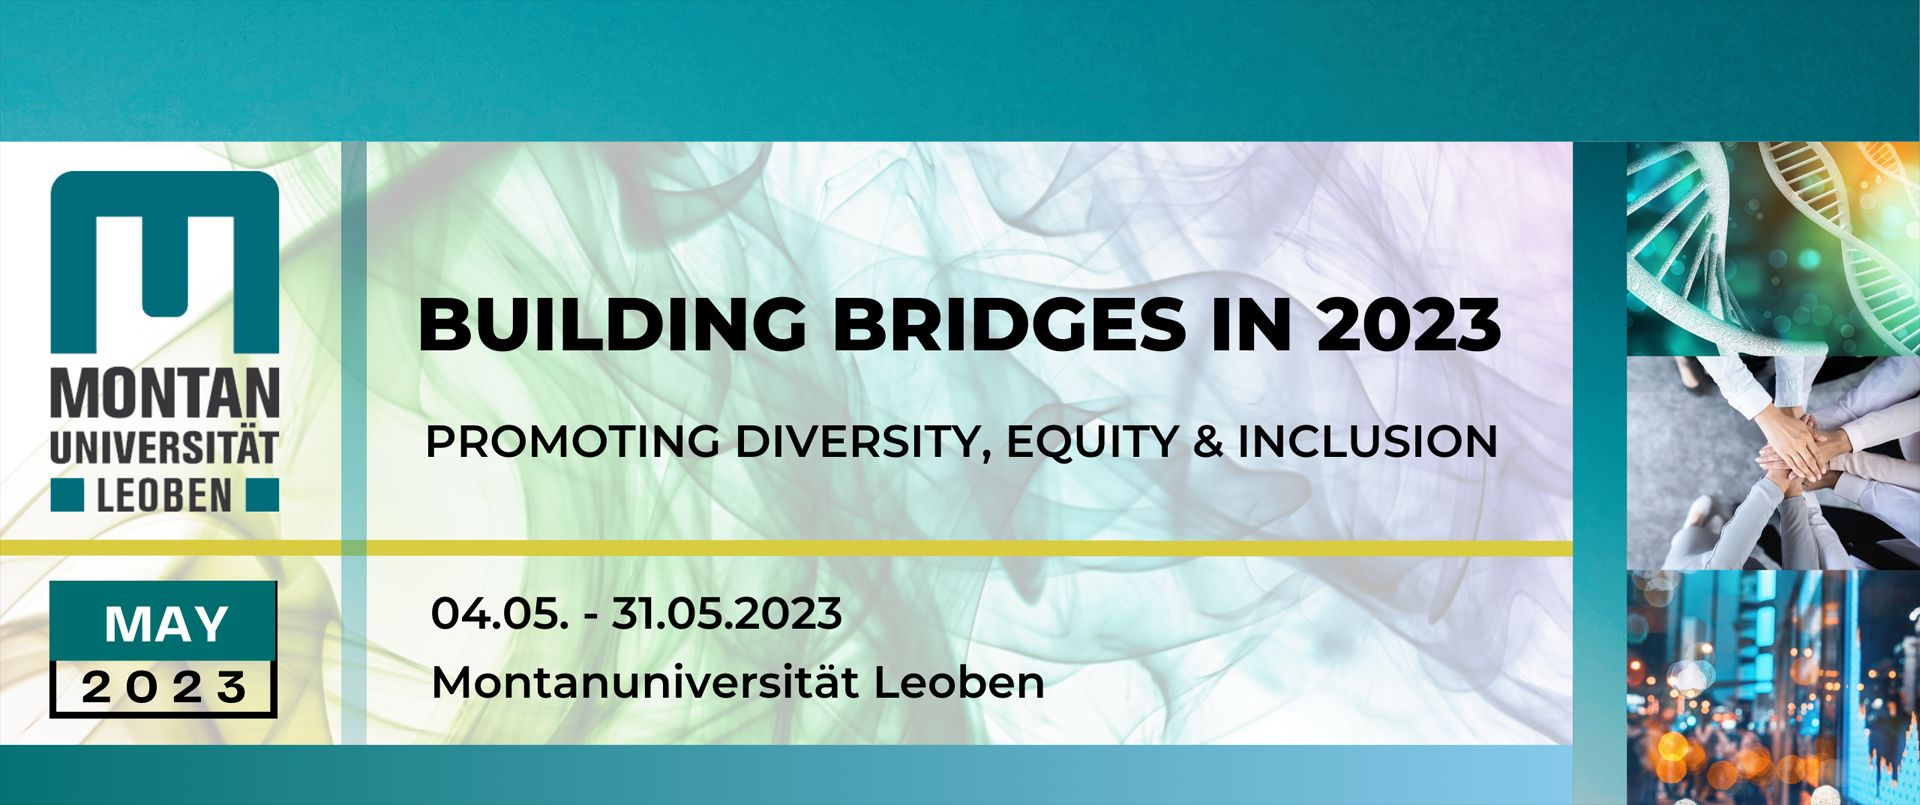 Building Bridges in 2023. Promoting Diversity, Equity & Inclusion. Mai 2023. Montanuniversität Leoben